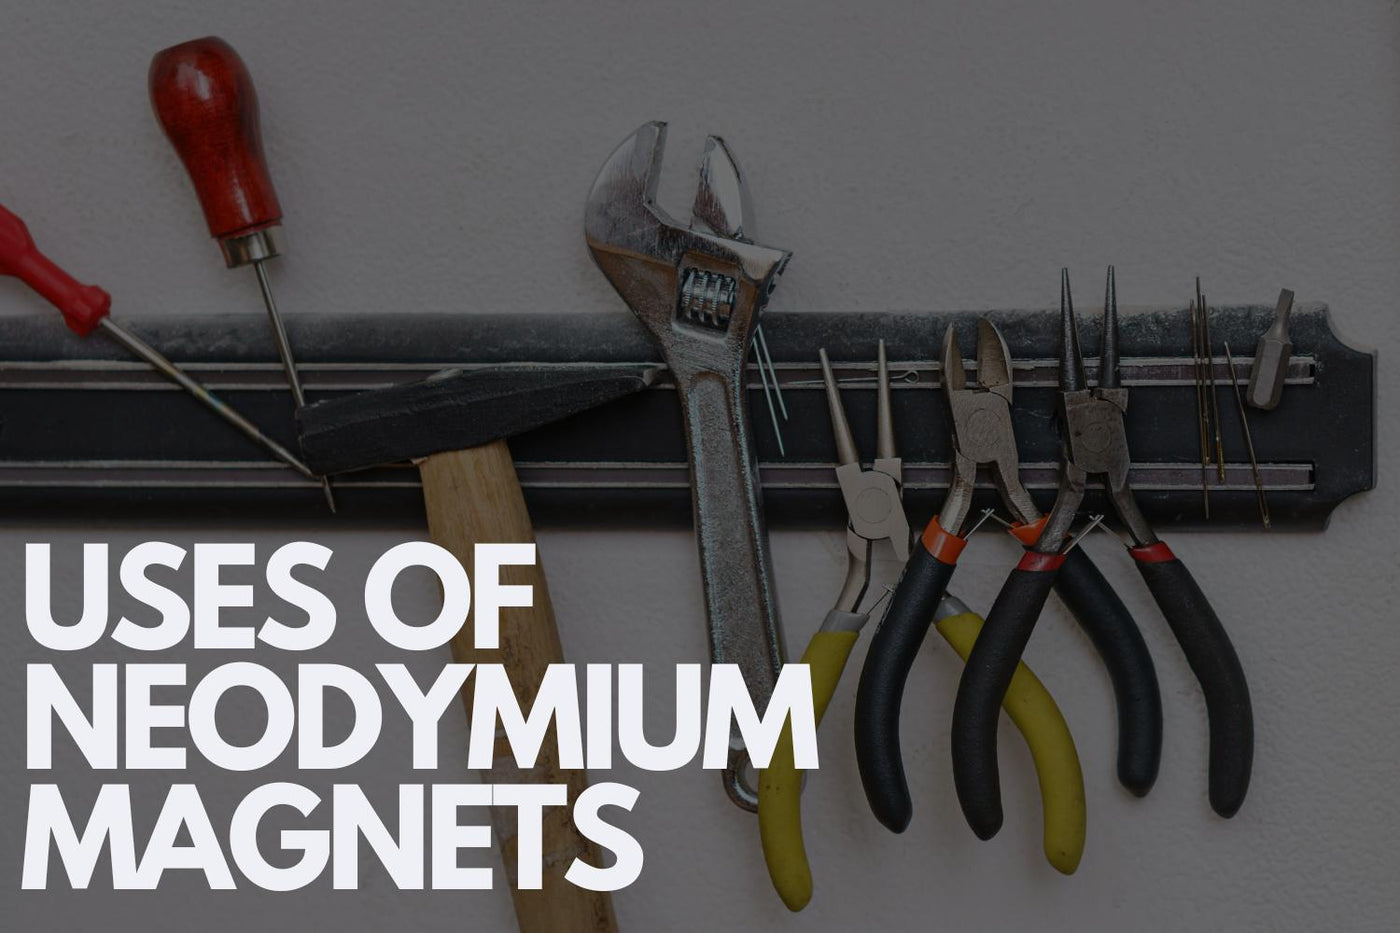 Uses of Neodymium Magnets